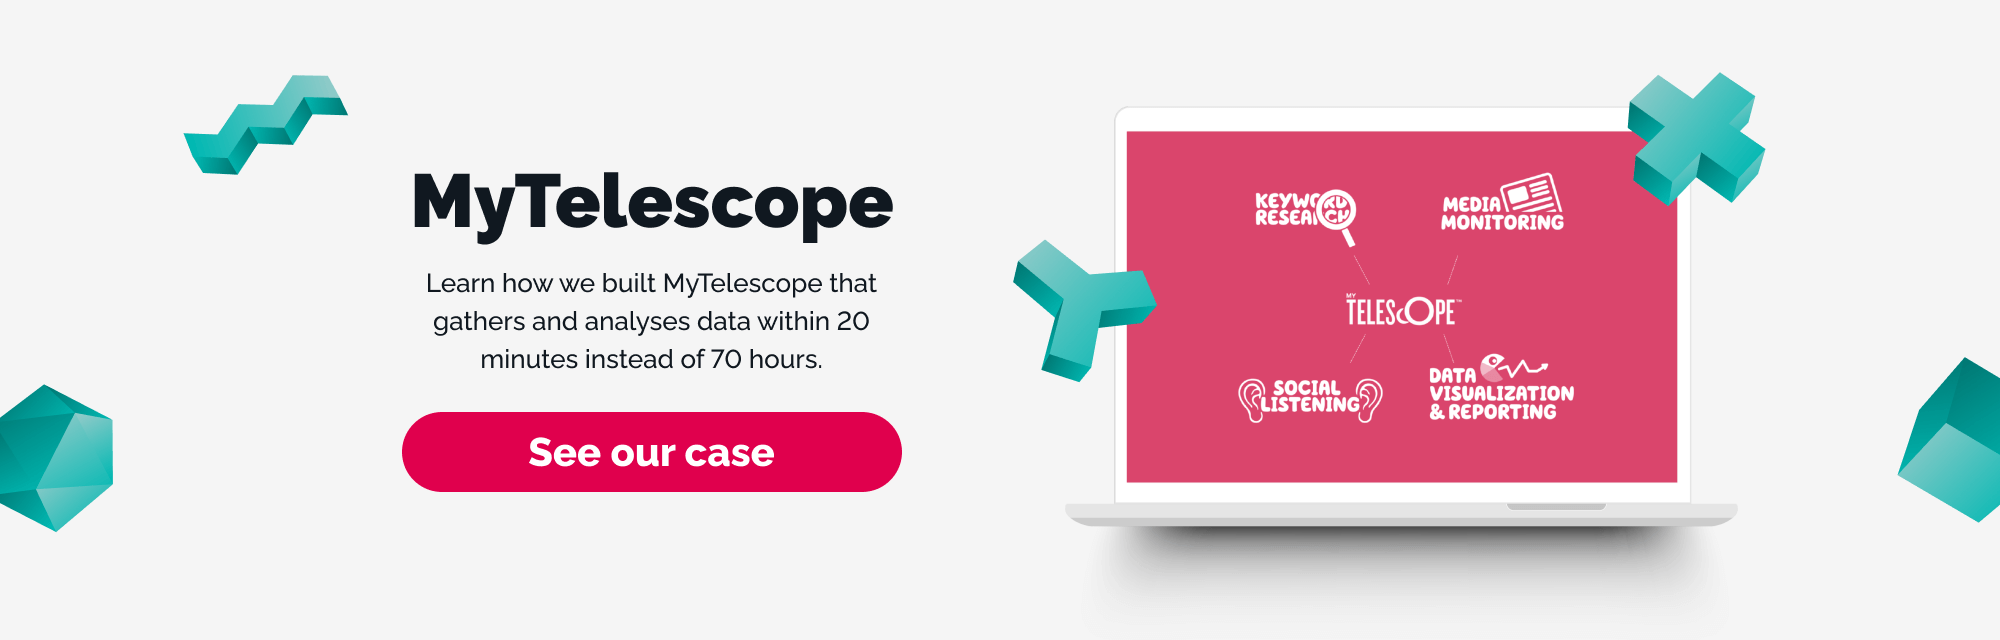 MyTelescope - analytical tool case study - TechMagic